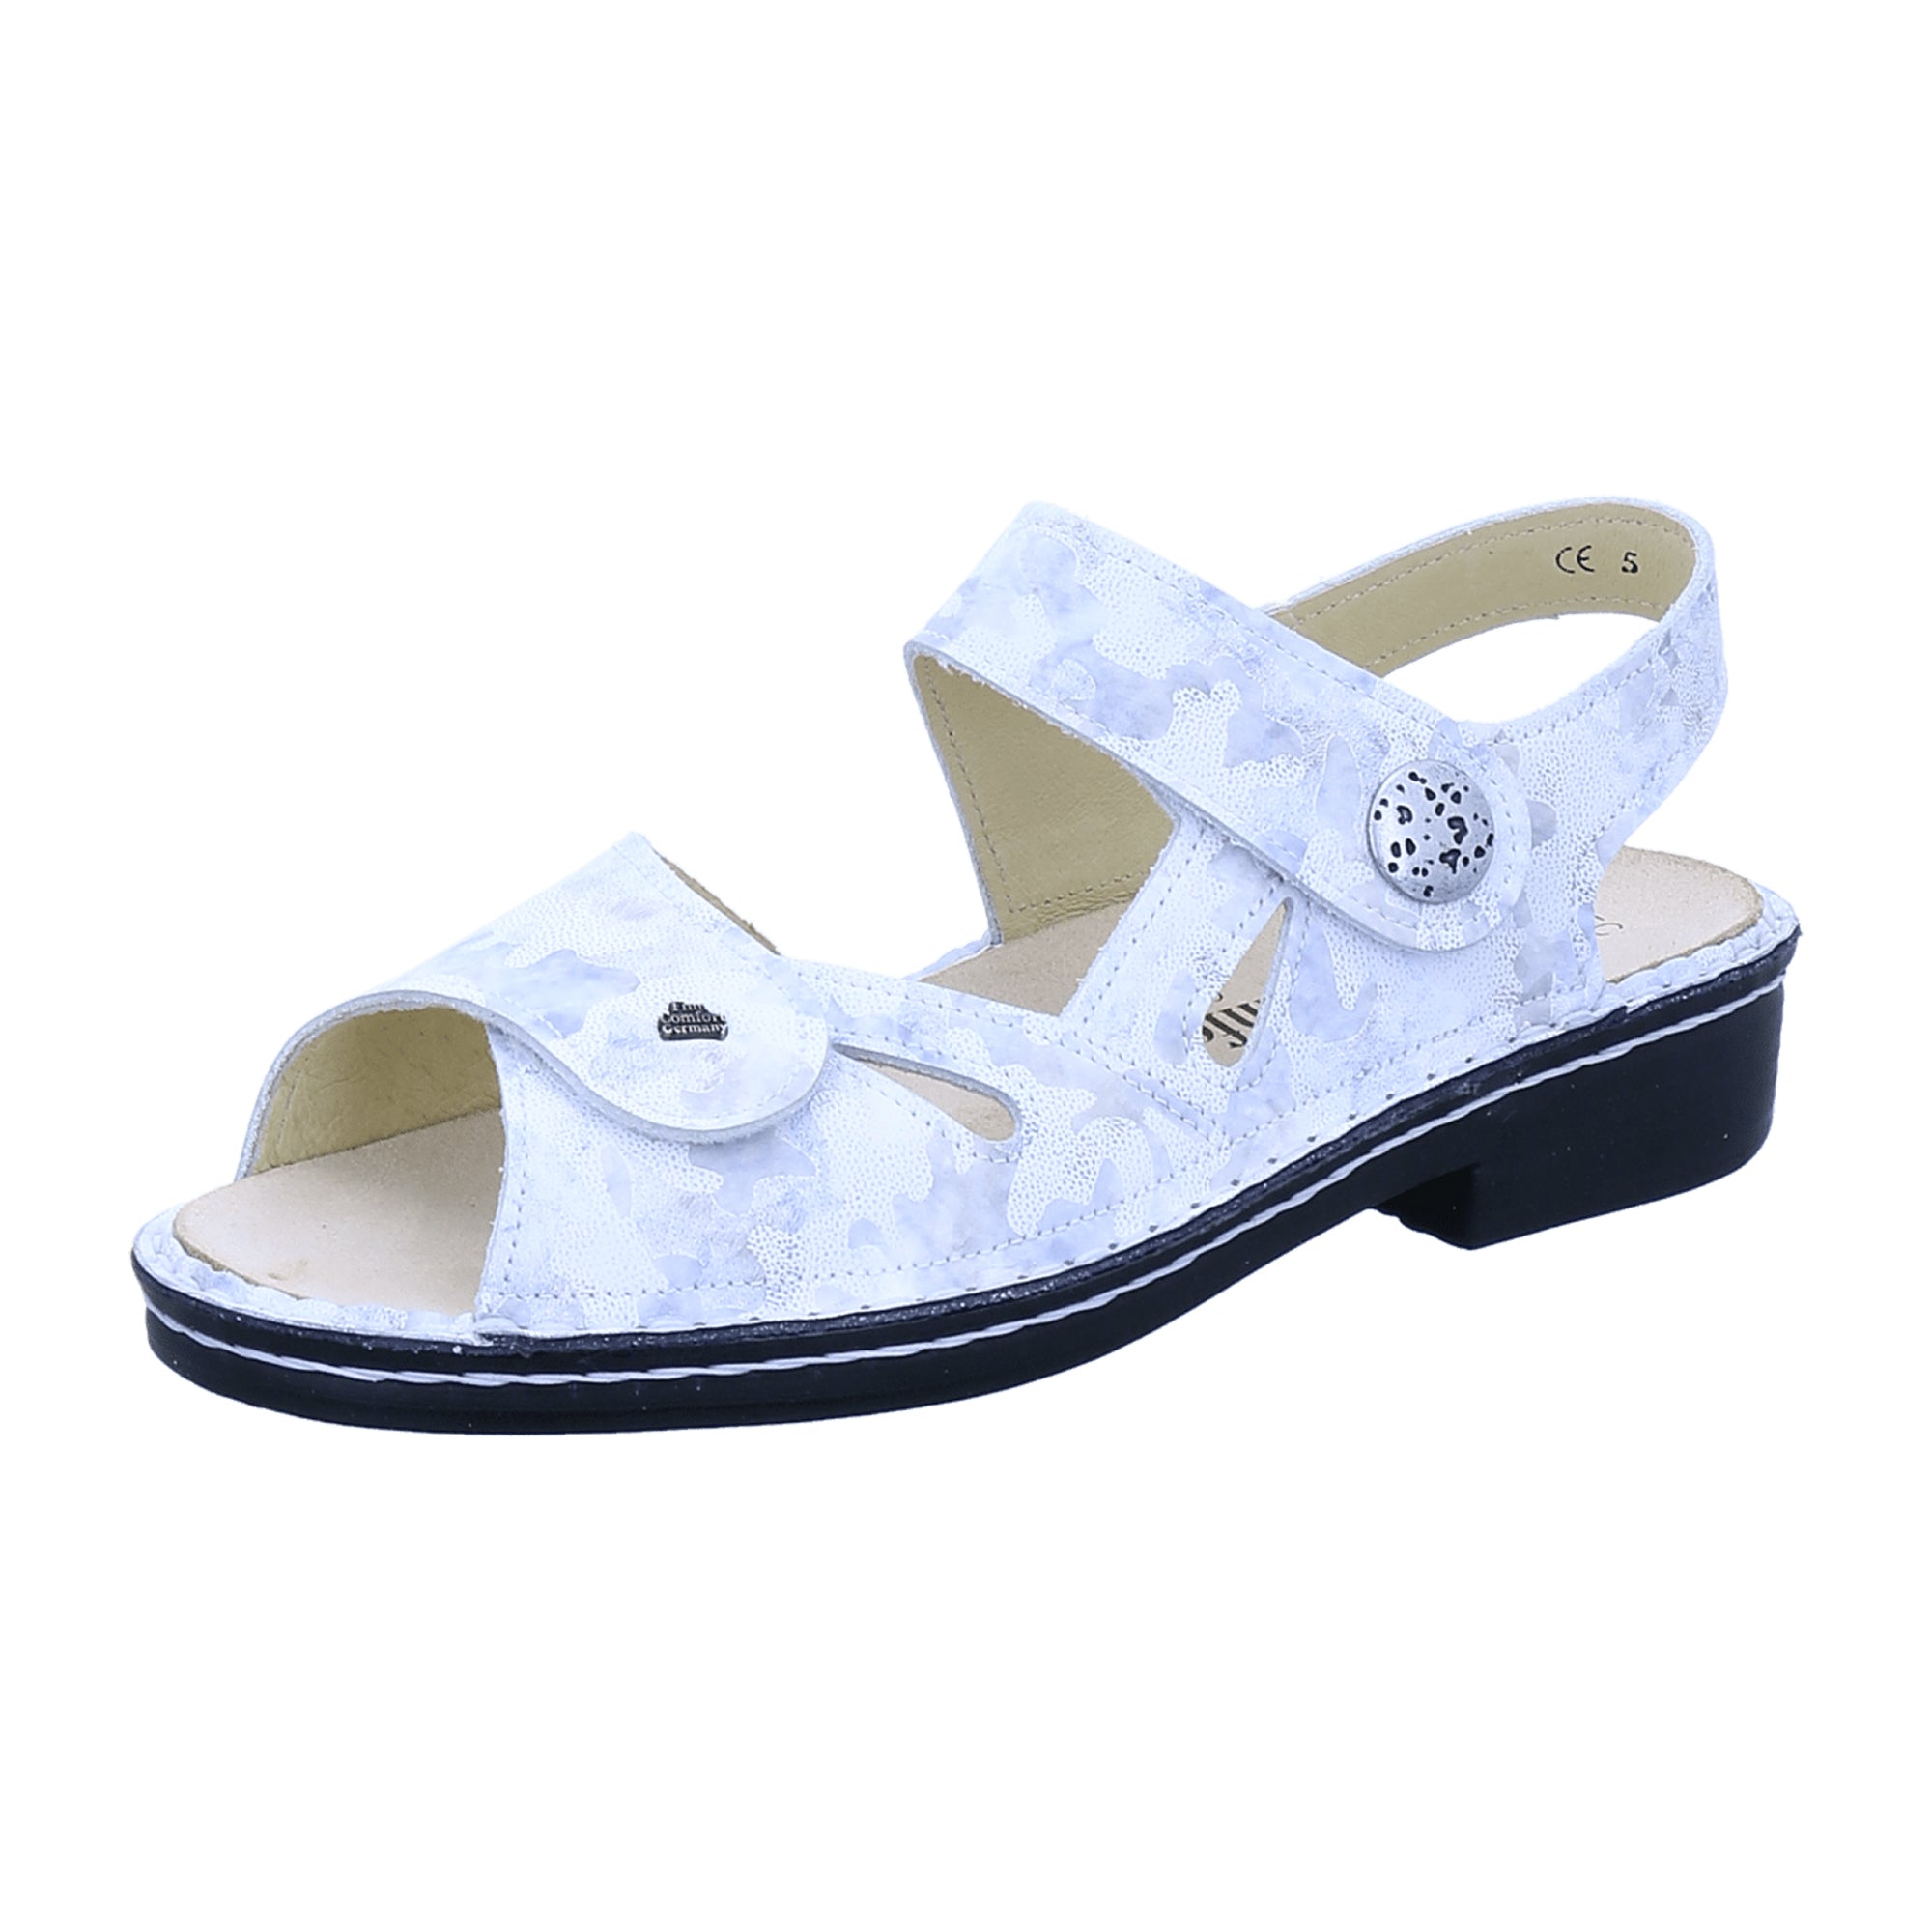 Finn Comfort Costa Women's Comfortable White Sandals - Stylish & Durable